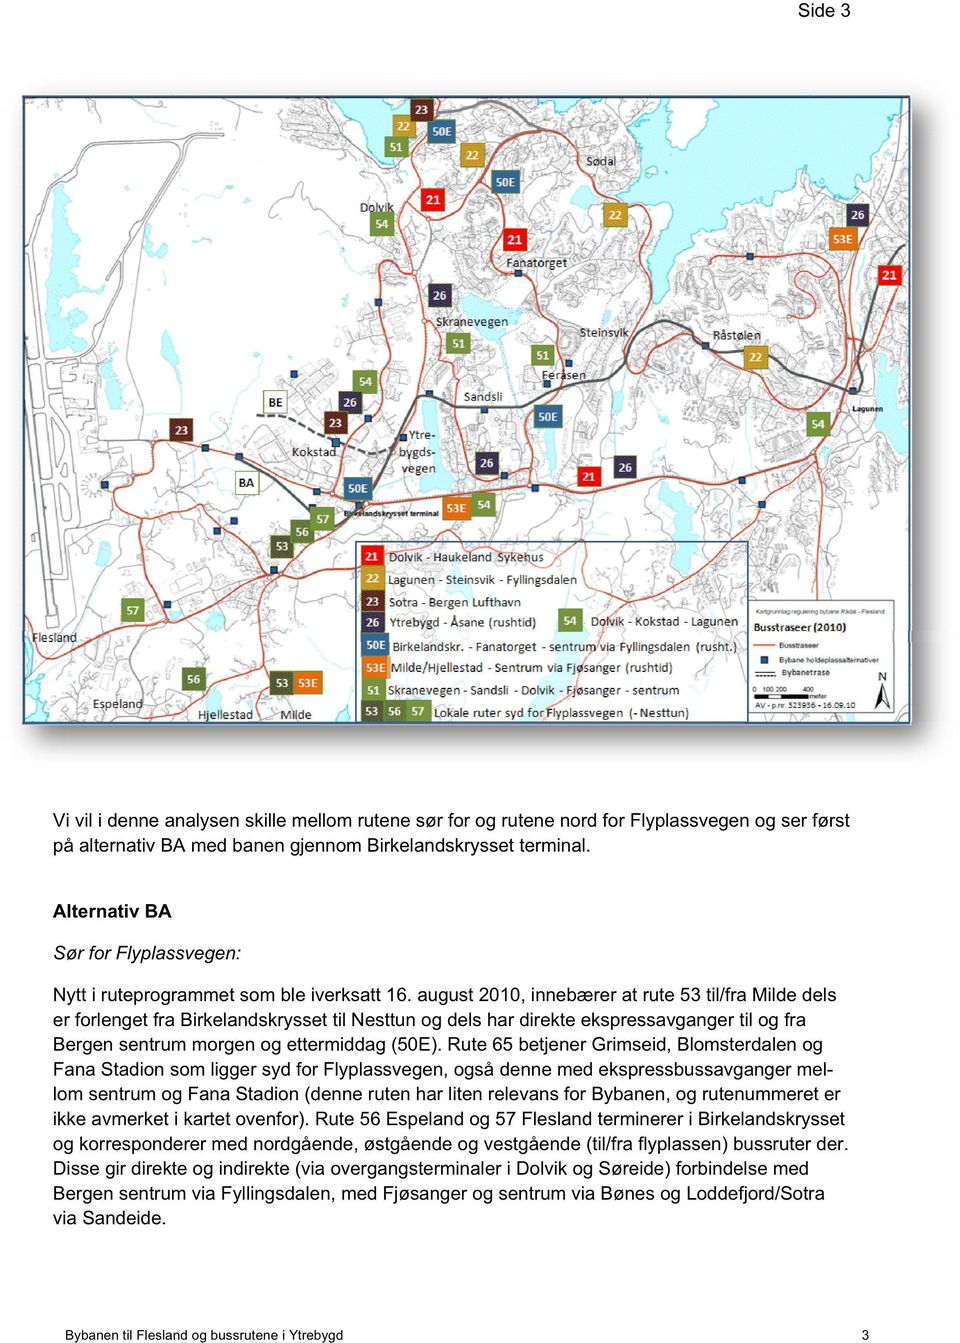 august 2010, innebærer at rute 53 til/fra Milde dels er forlenget fra Birkelandskrysset til Nesttun og dels har direkte ekspressavganger til og fra Bergen sentrum morgen og ettermiddag (50E).